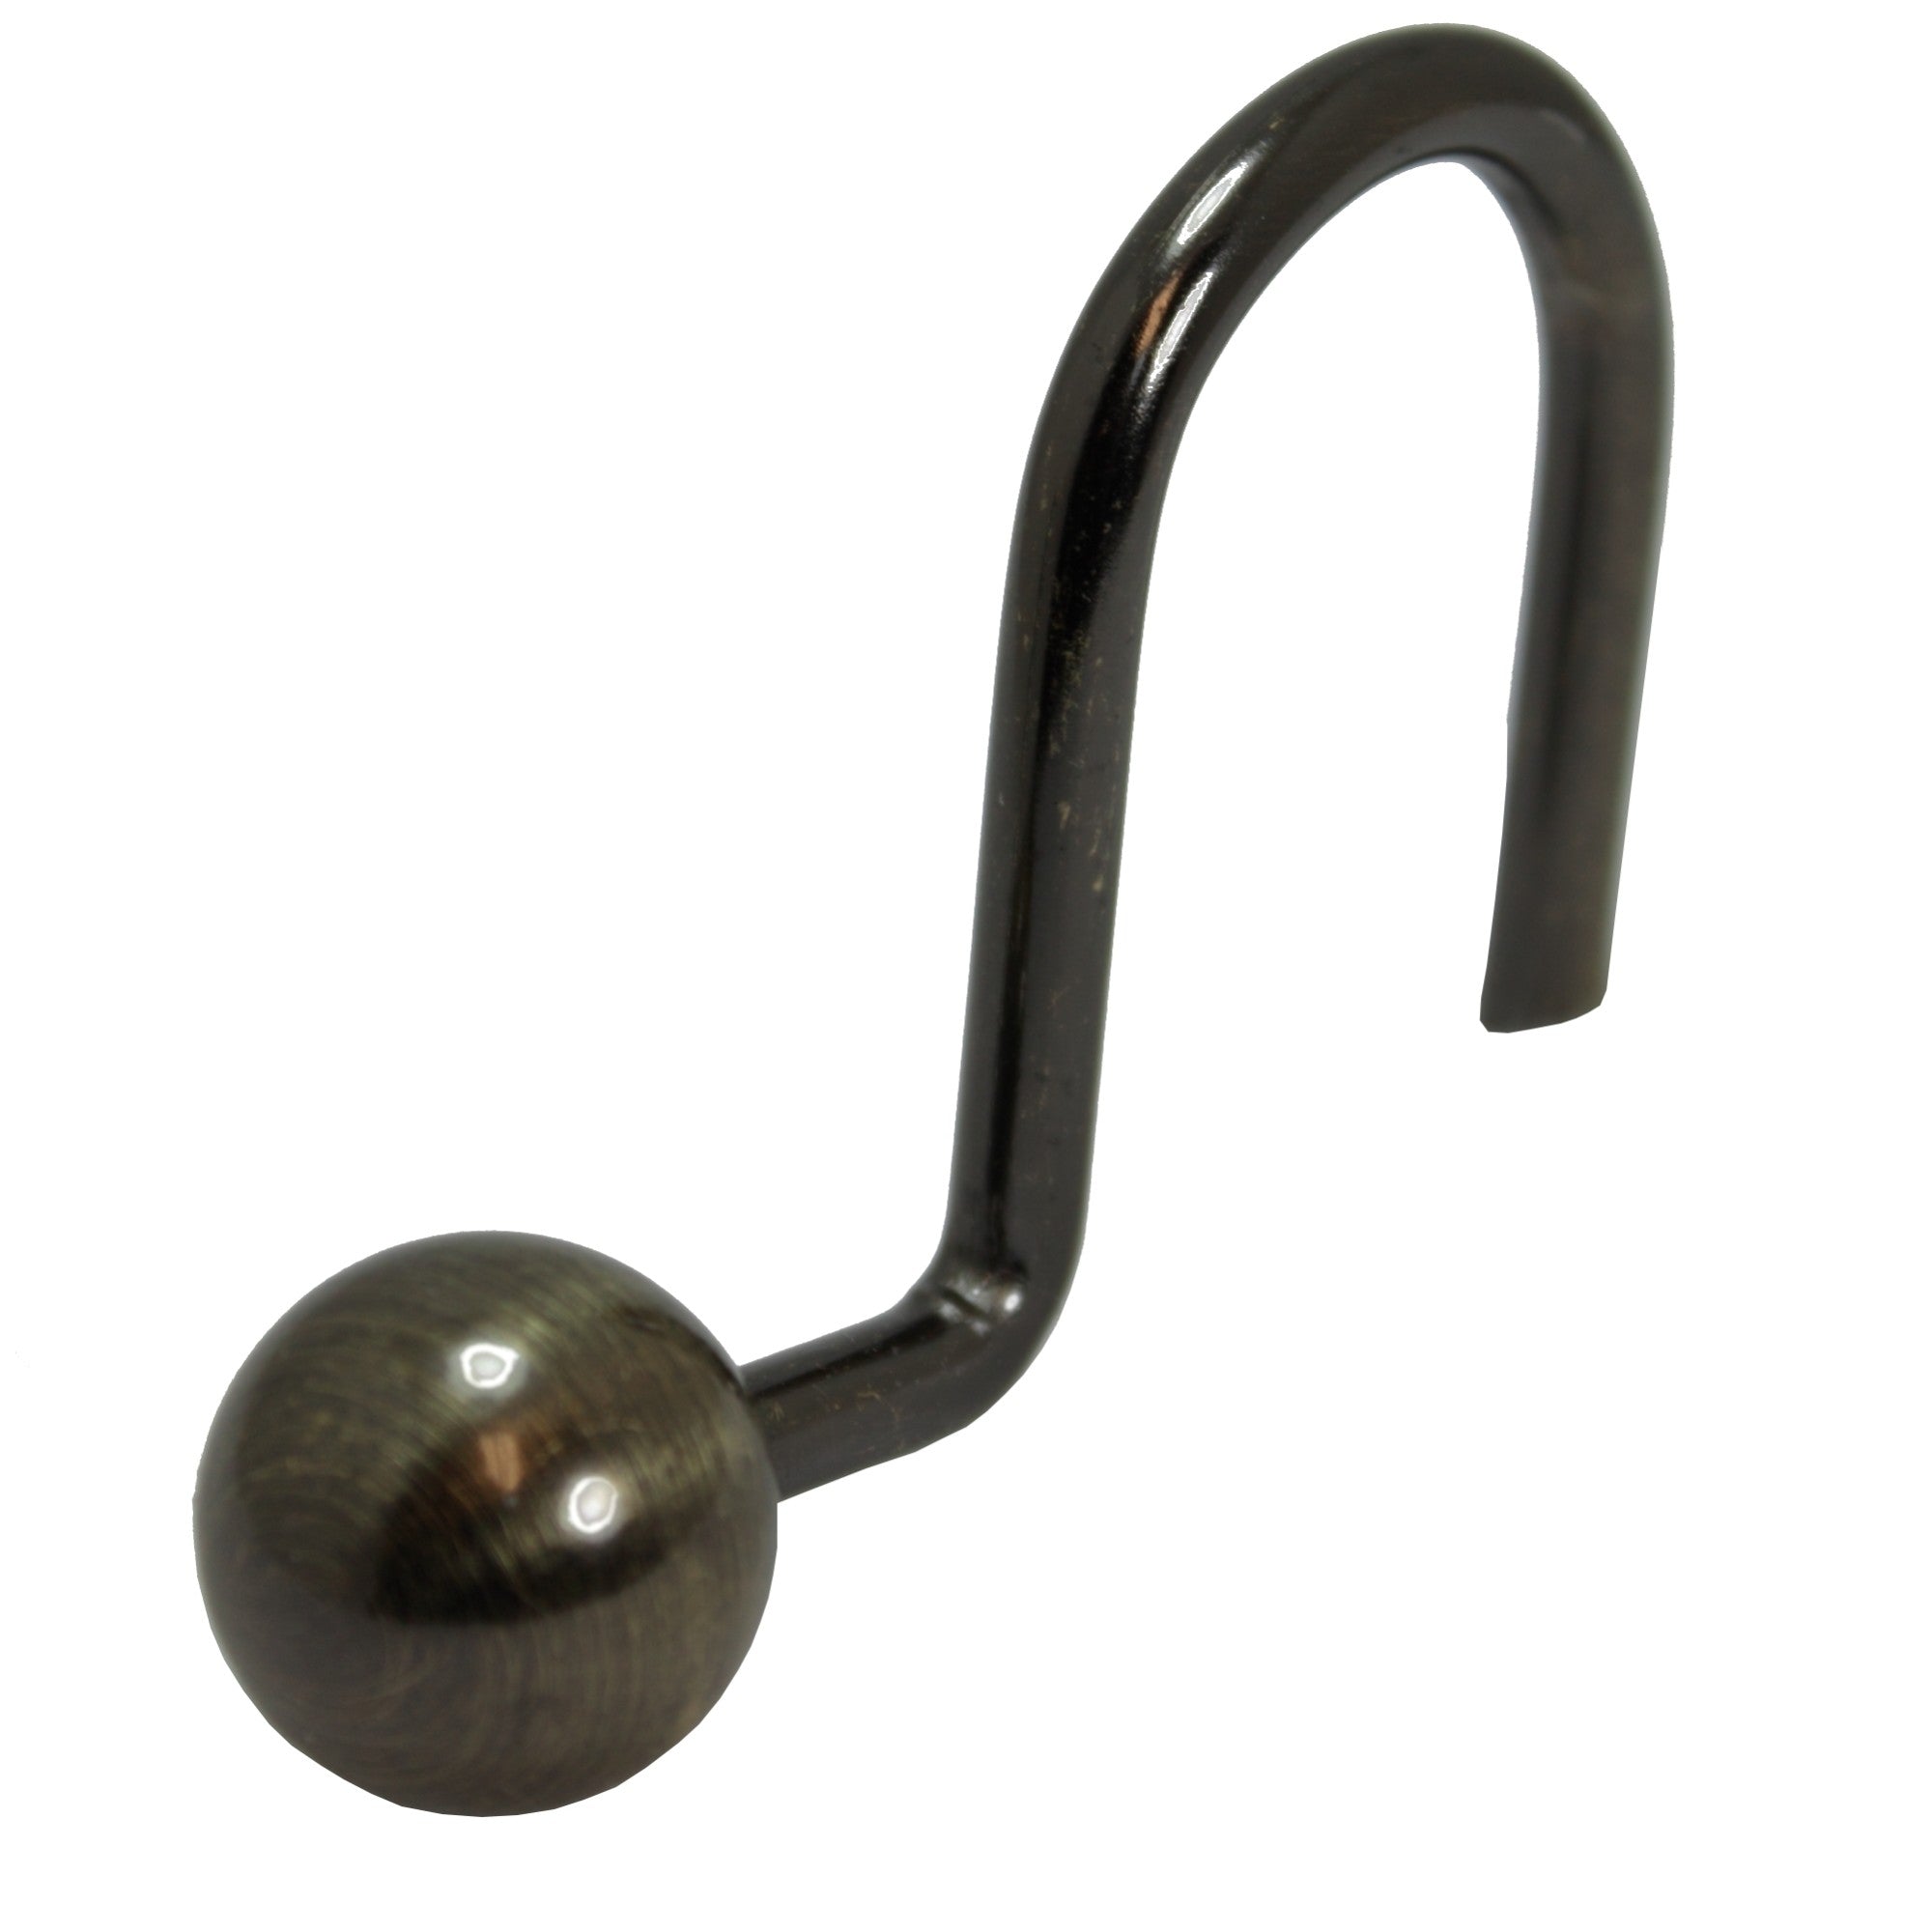 Rubbed Bronze Metal Ball Hooks